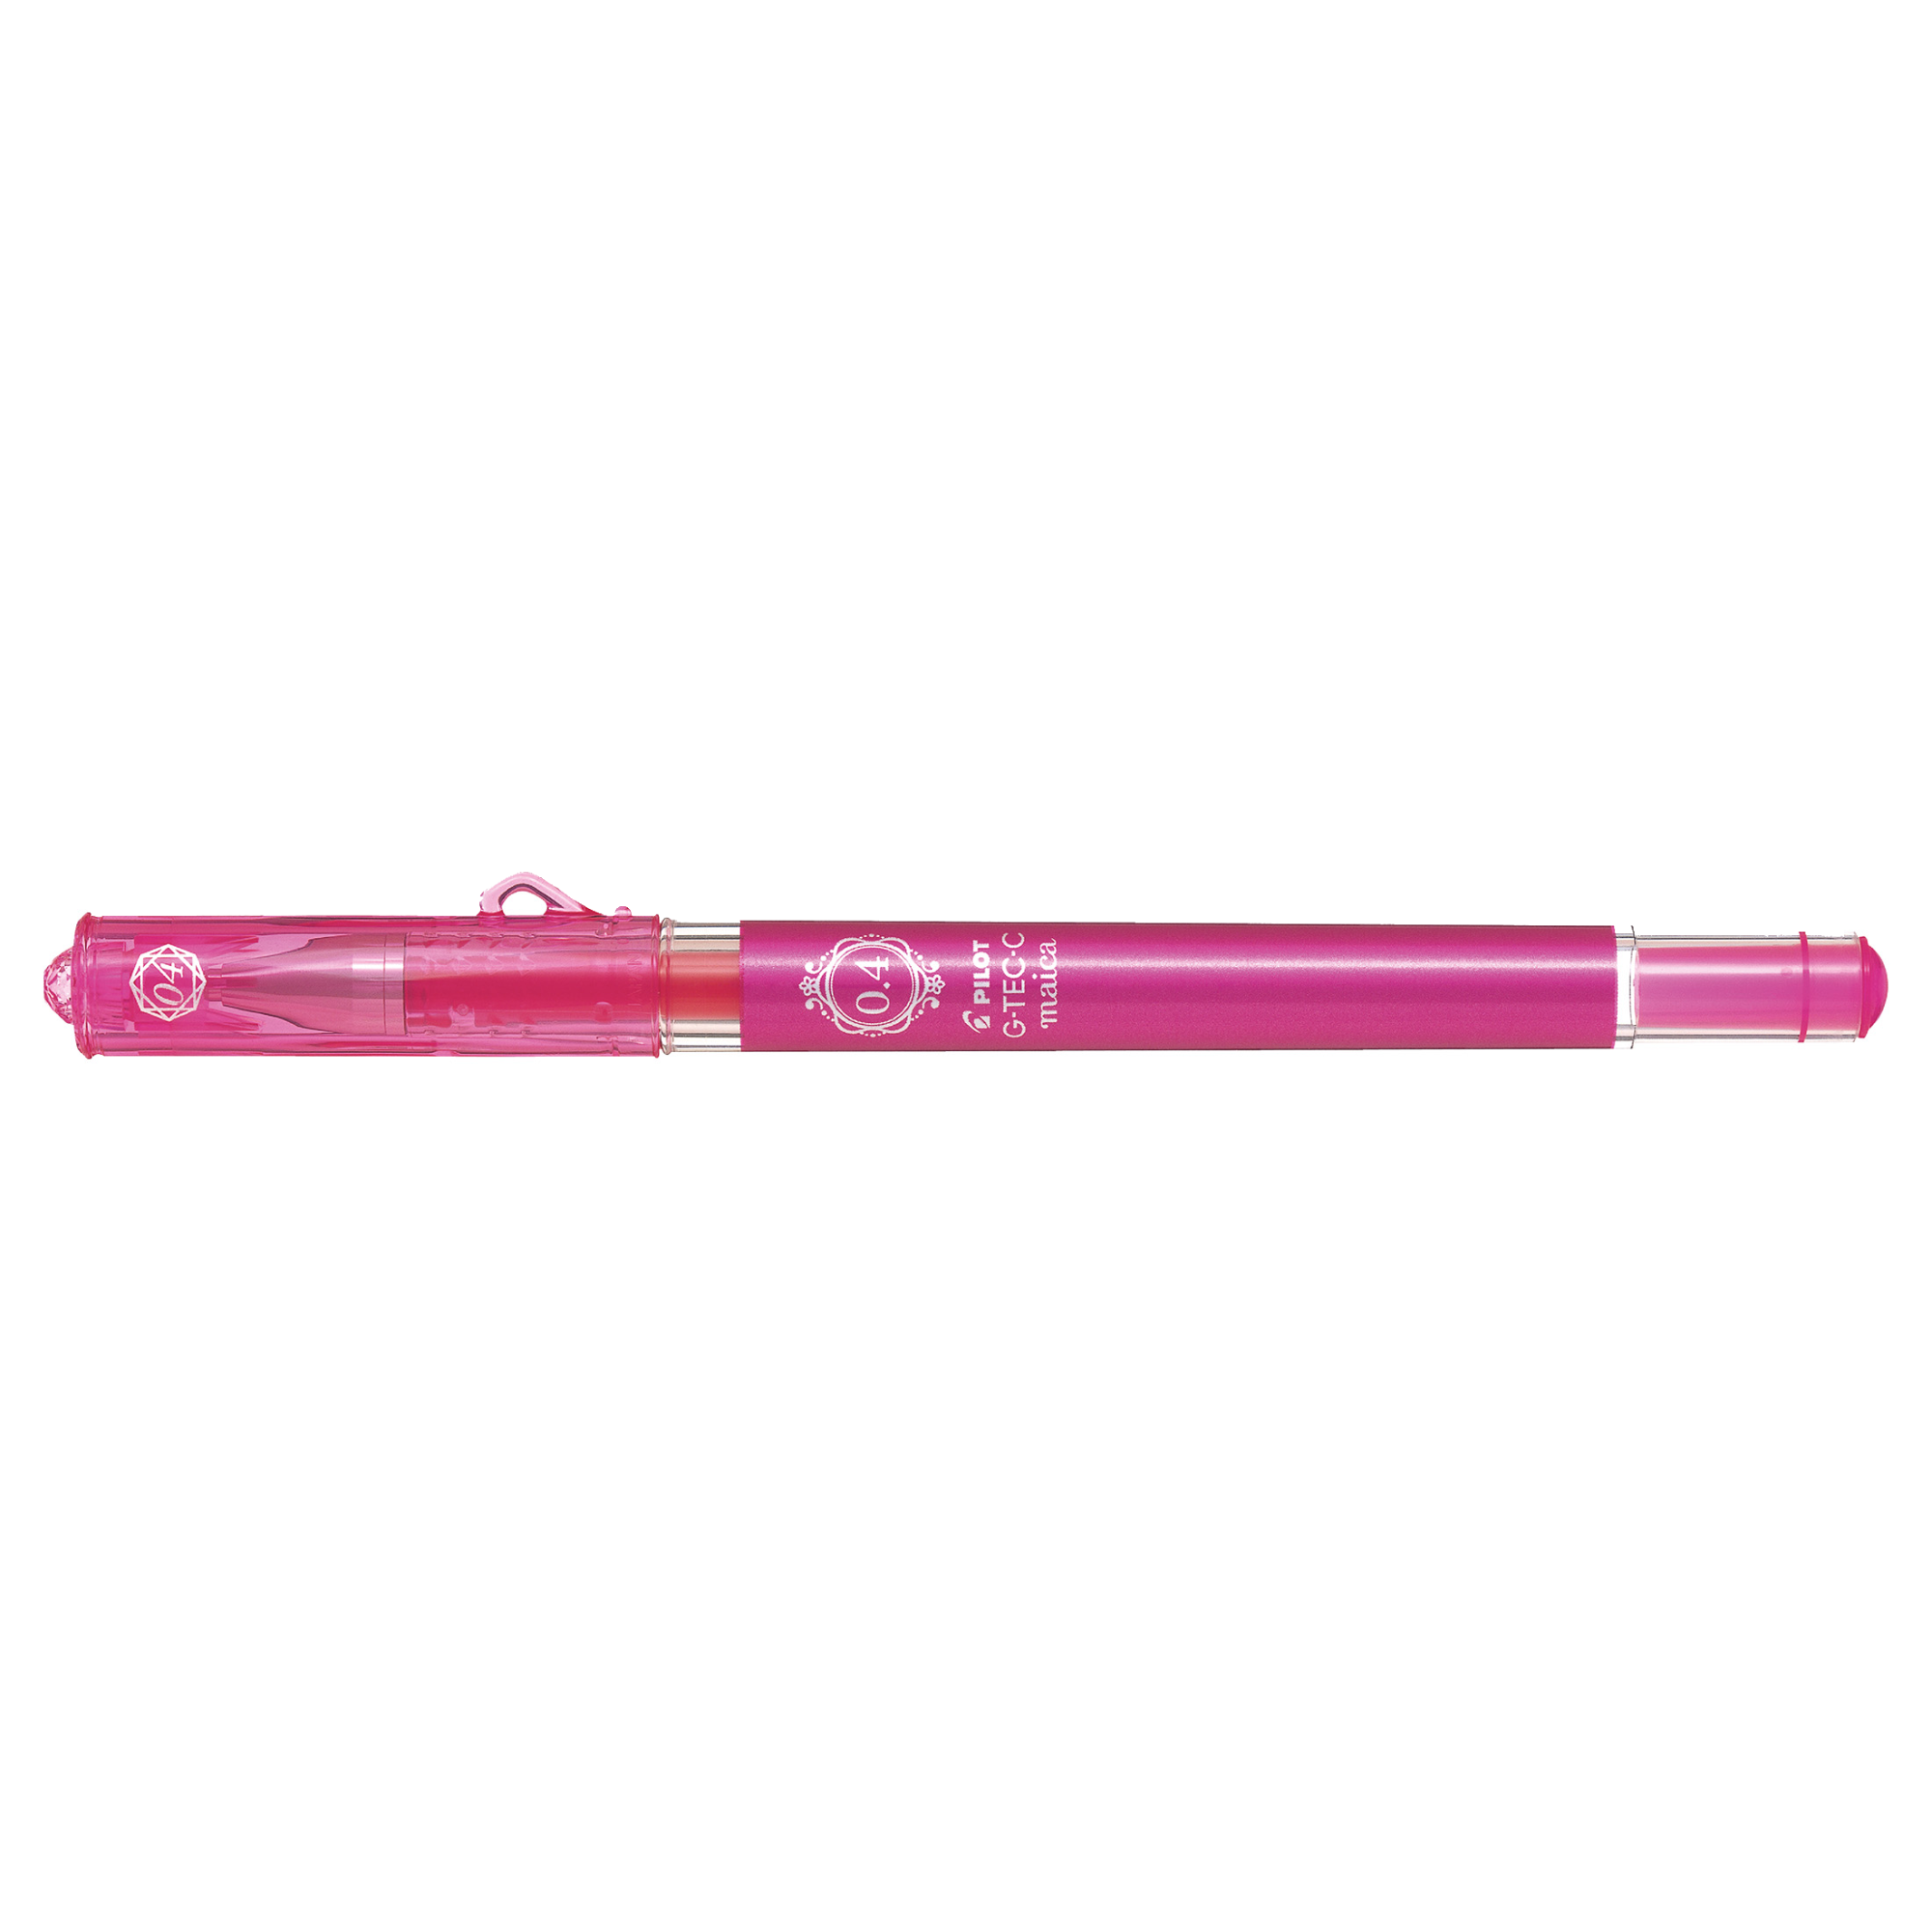 Maica G-TEC-C, Pink, Ultra fine gel ink roller * Pilot